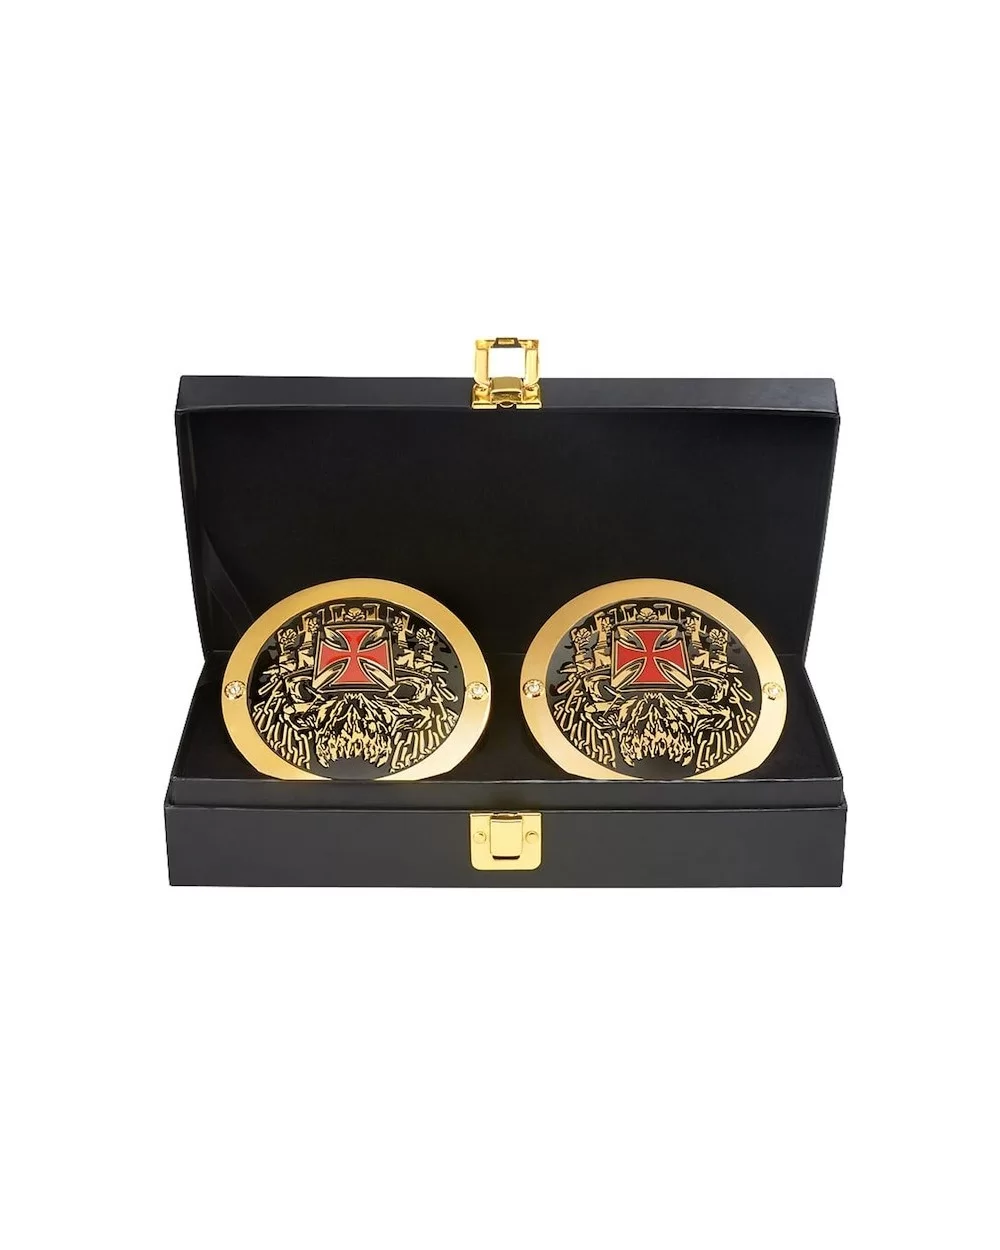 Triple H Championship Replica Side Plate Box Set $30.40 Title Belts